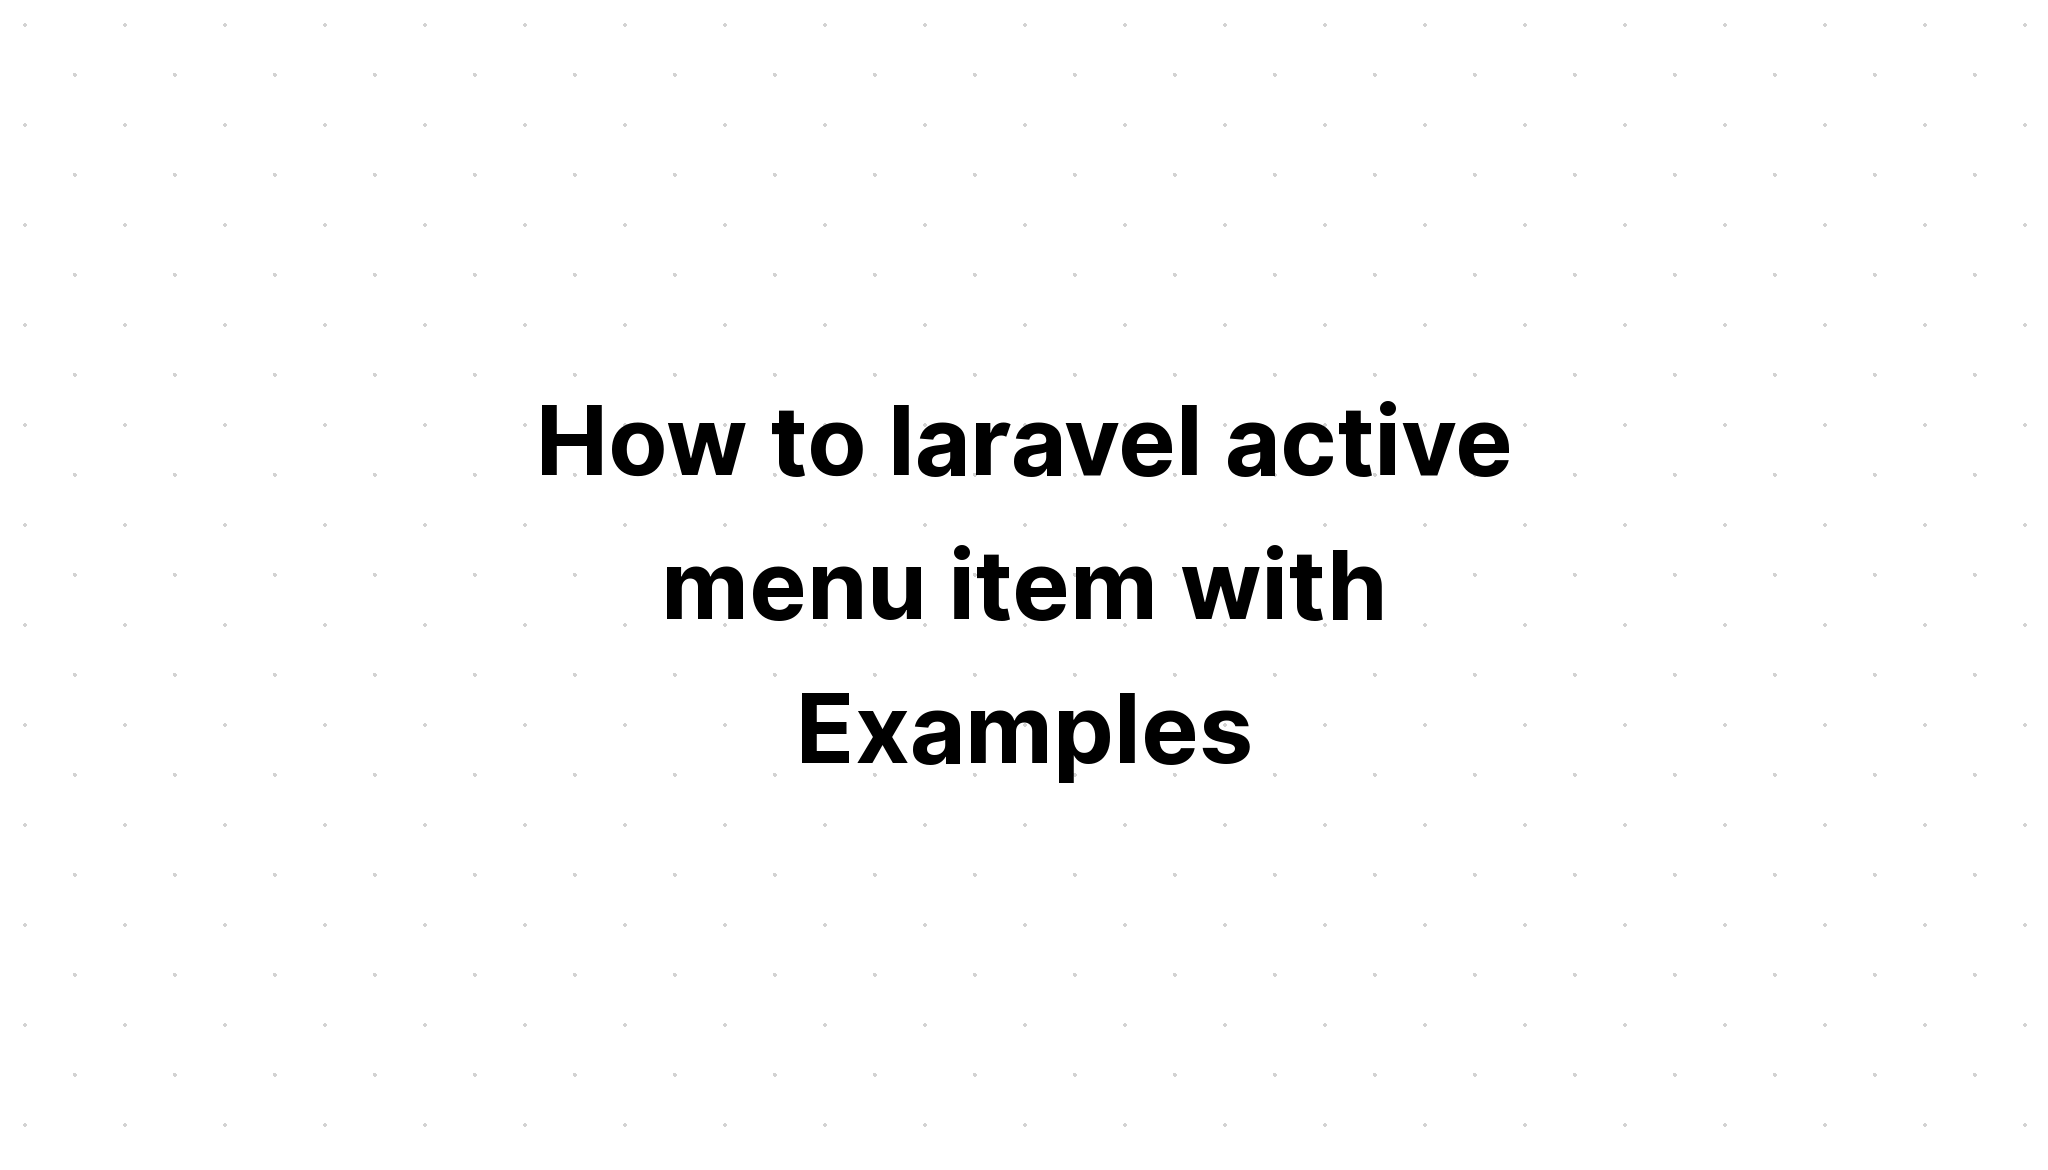 Cara laravel item menu aktif dengan Contoh